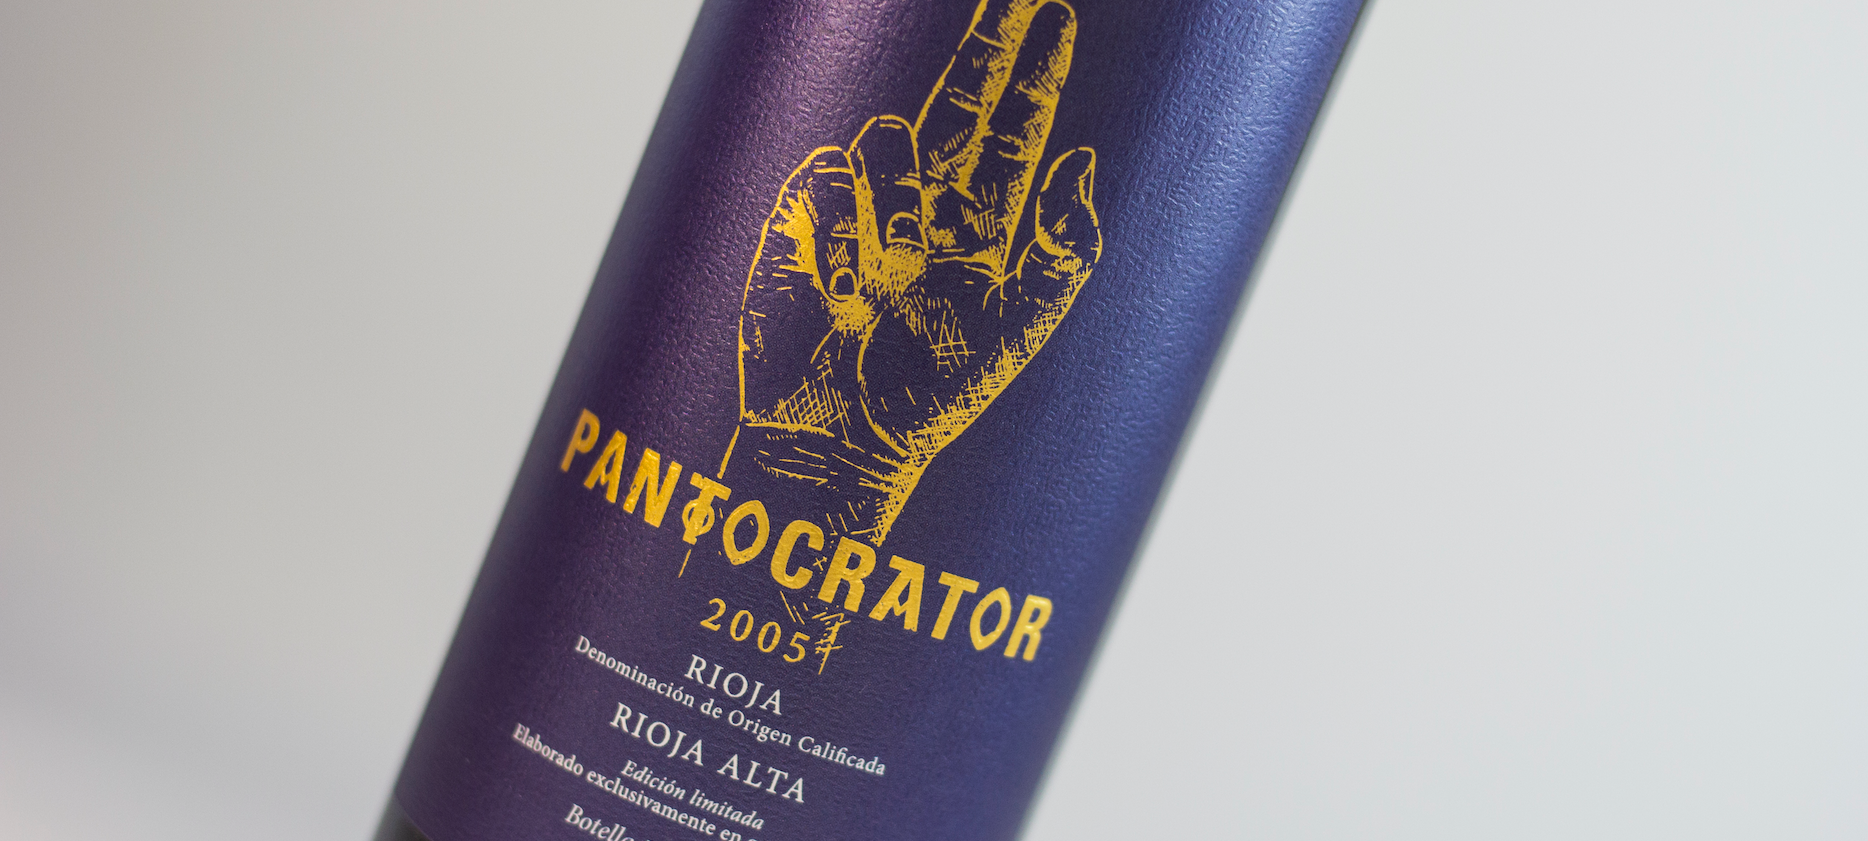 Vino Pantocrator 2005, un gran vino de Bodegas Tarón - VINOS DIFERENTES